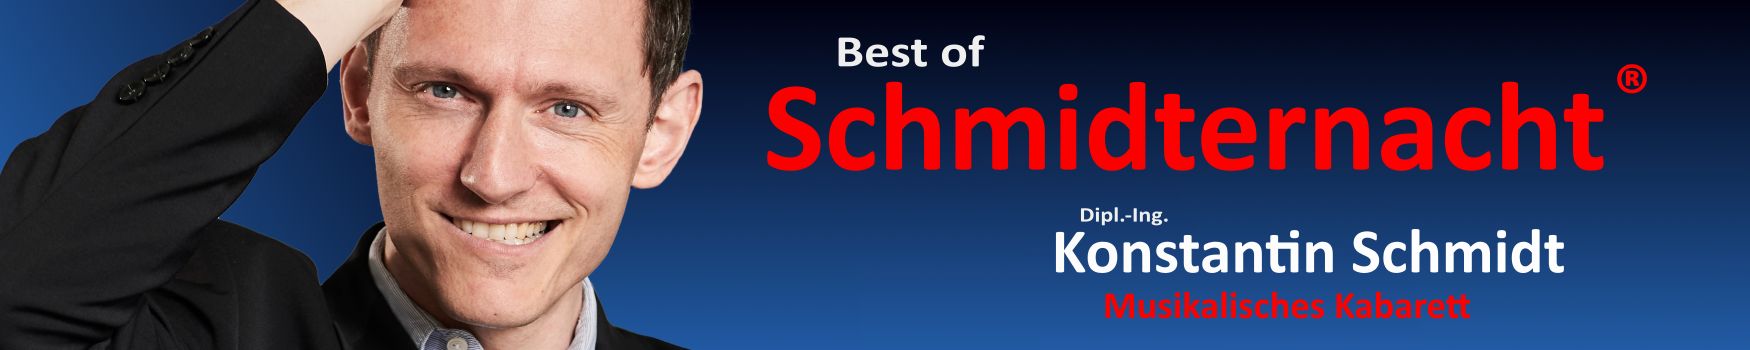 Best of Schmidternacht